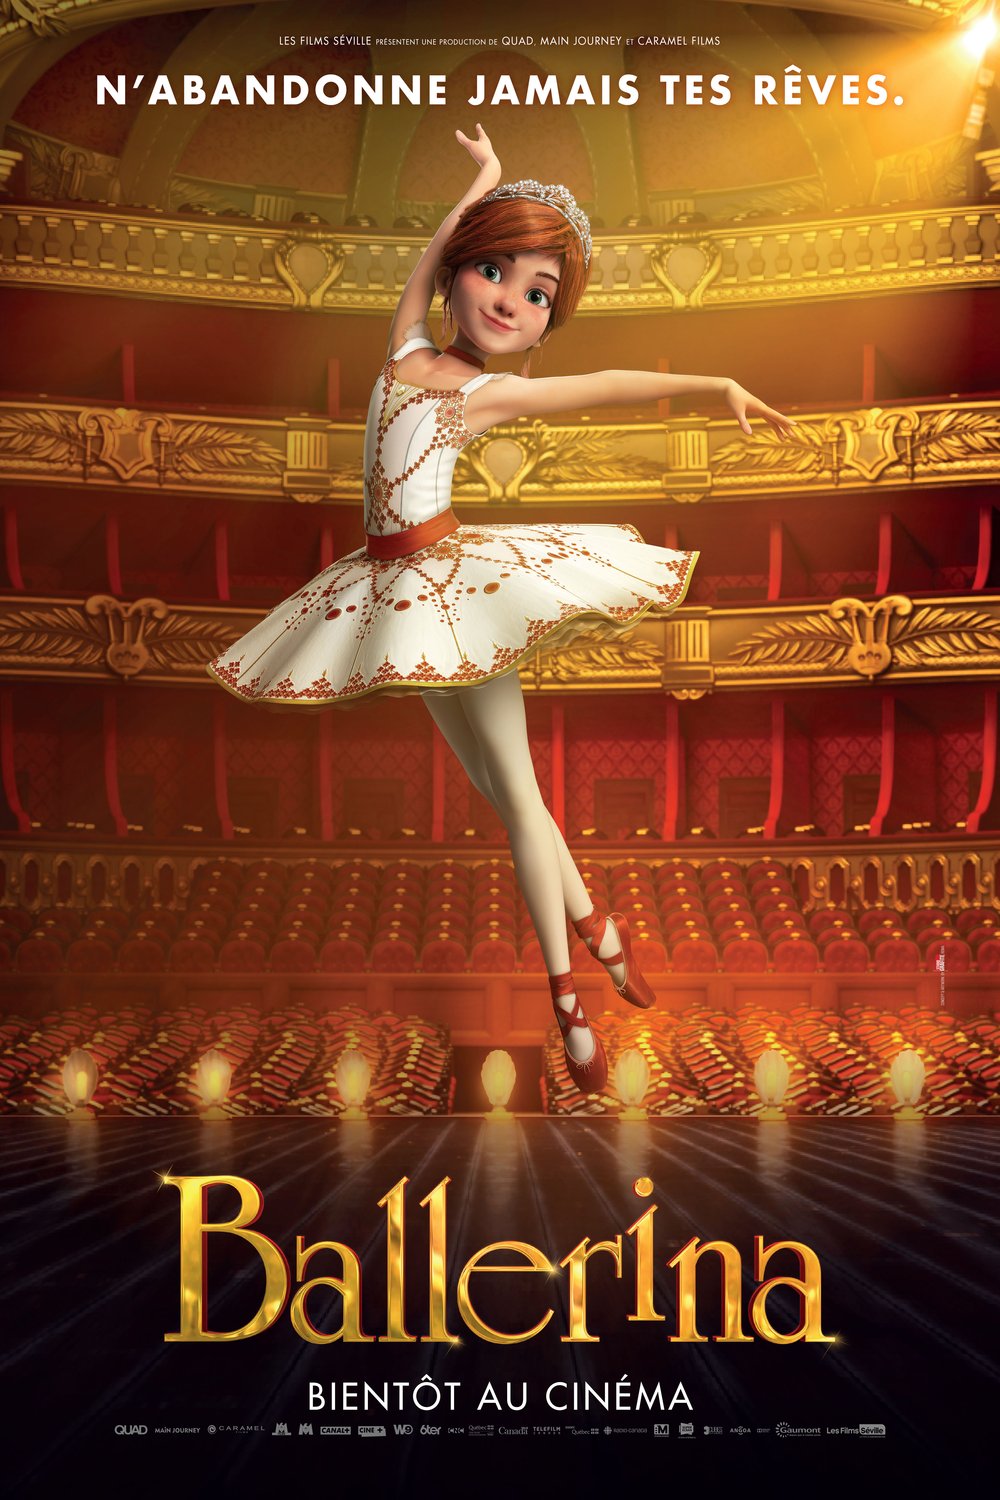 L'affiche du film Ballerina v.f.